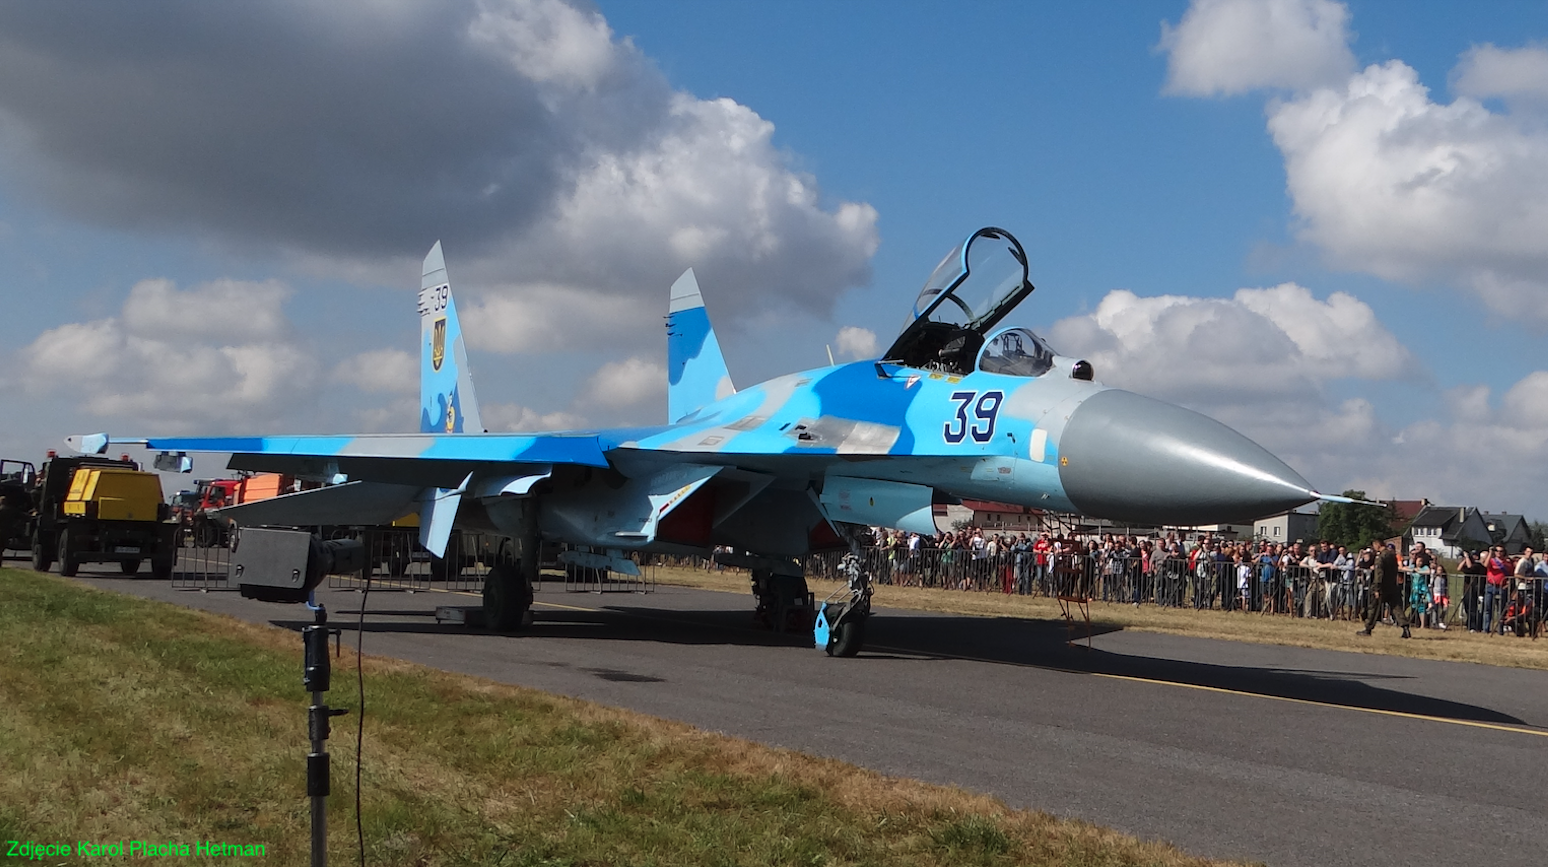 Su-27 nb 39 Ukraina. 2011 rok. Zdjęcie Karol Placha Hetman